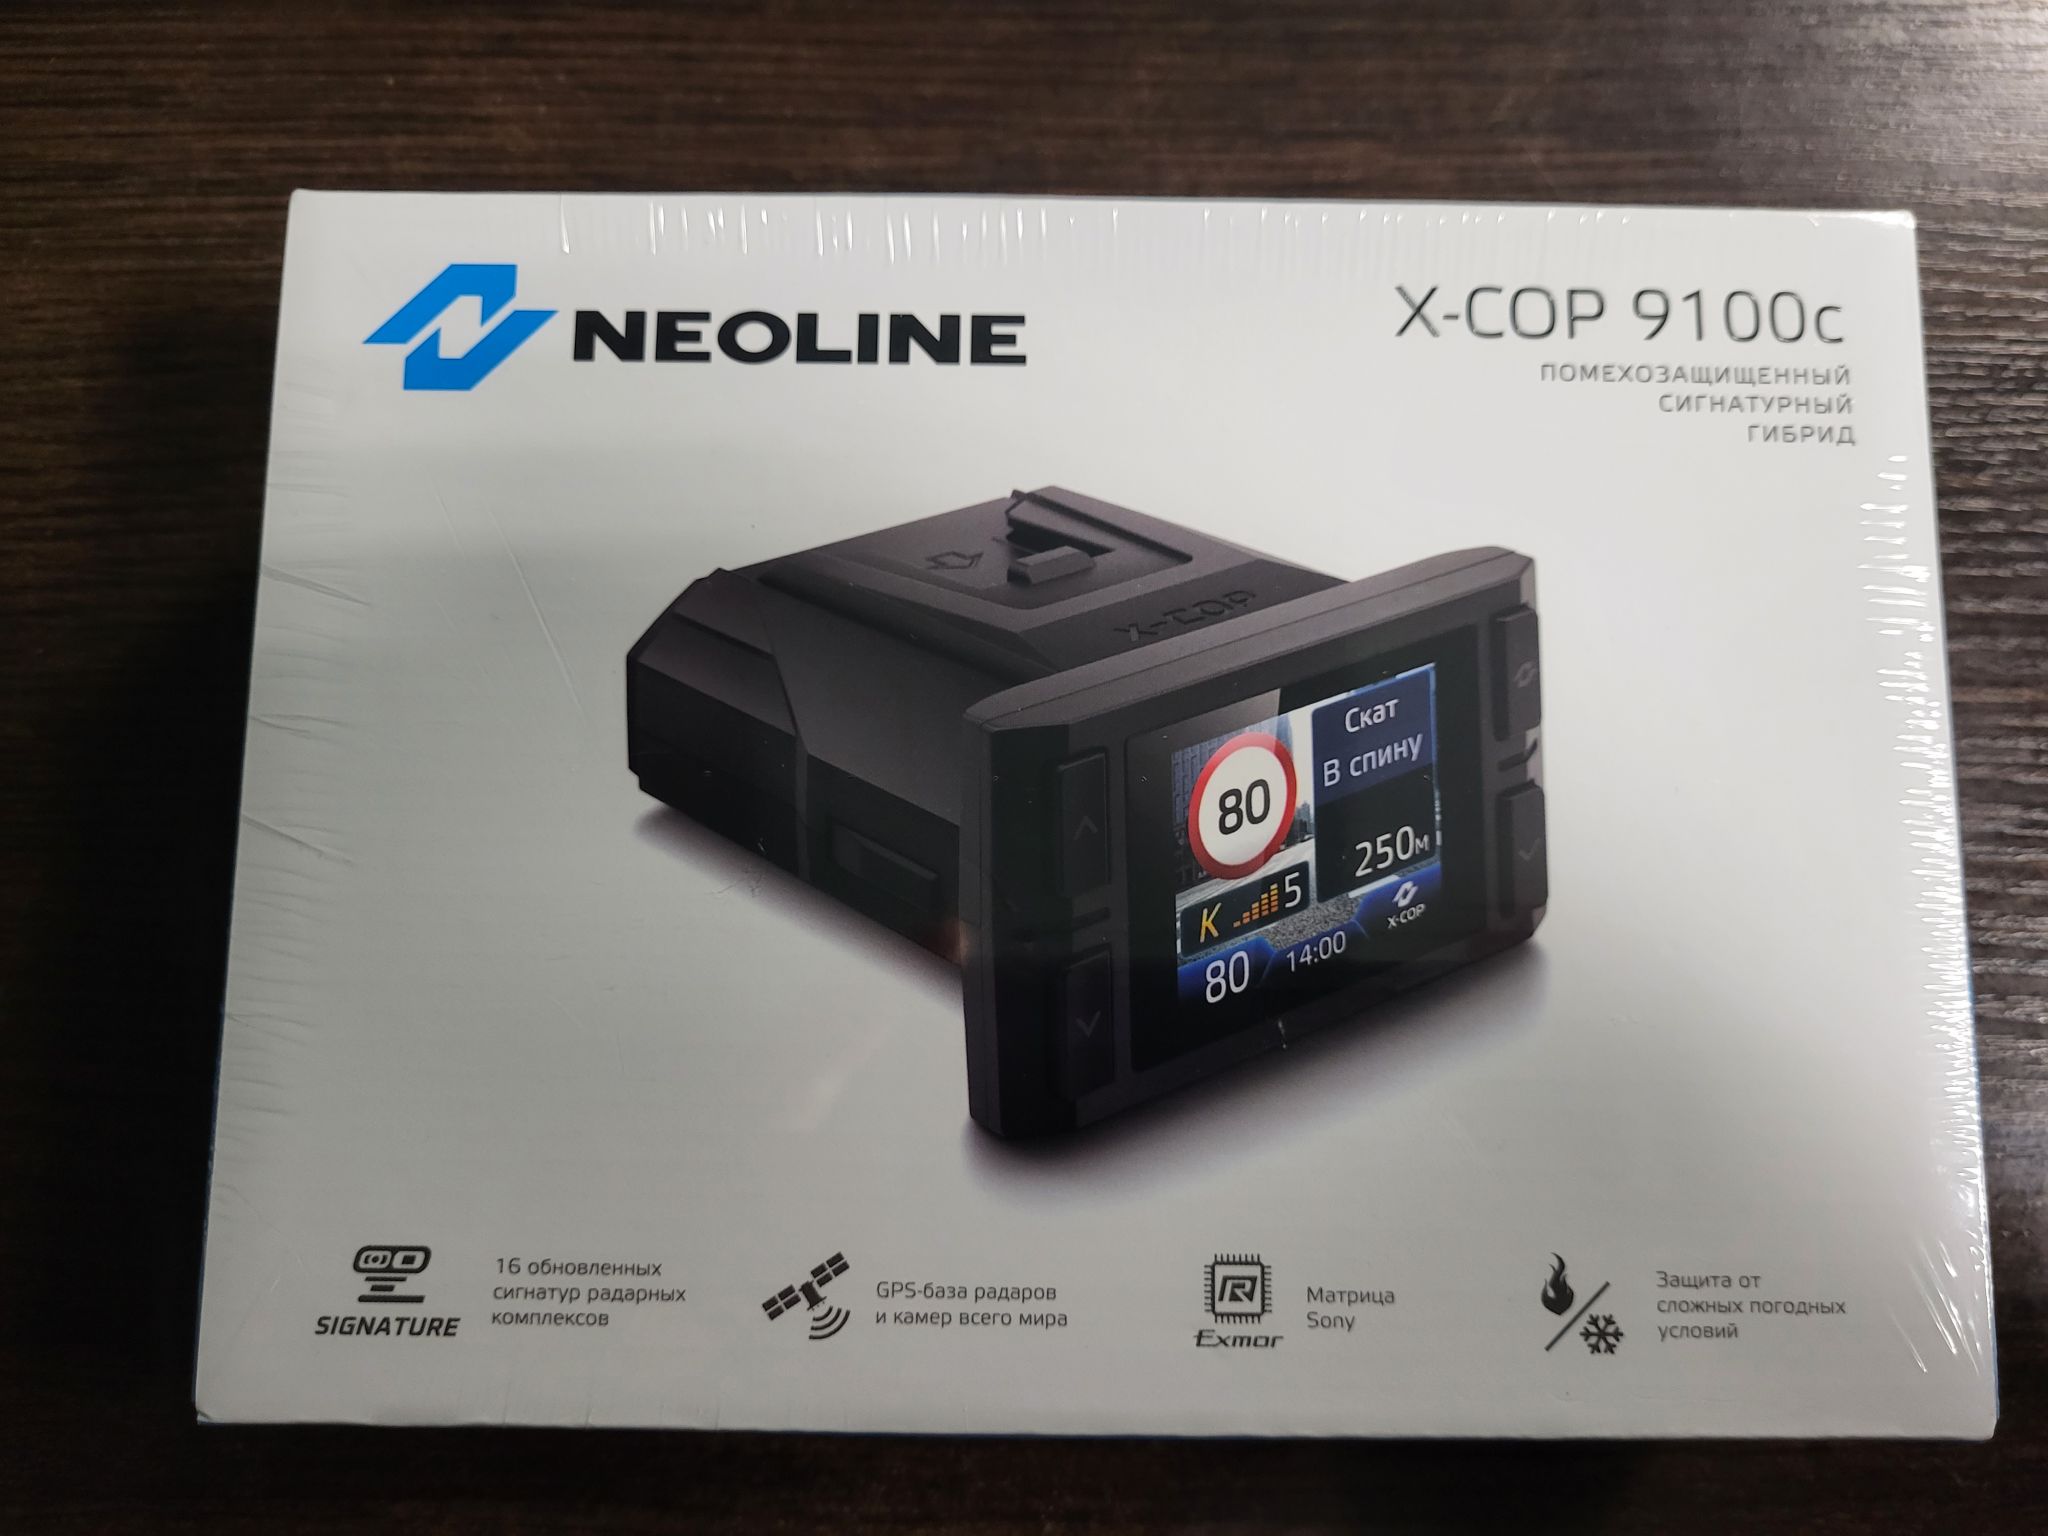 Neoline x-cop 9100x. Neoline x-cop 9100s обновление базы радаров.